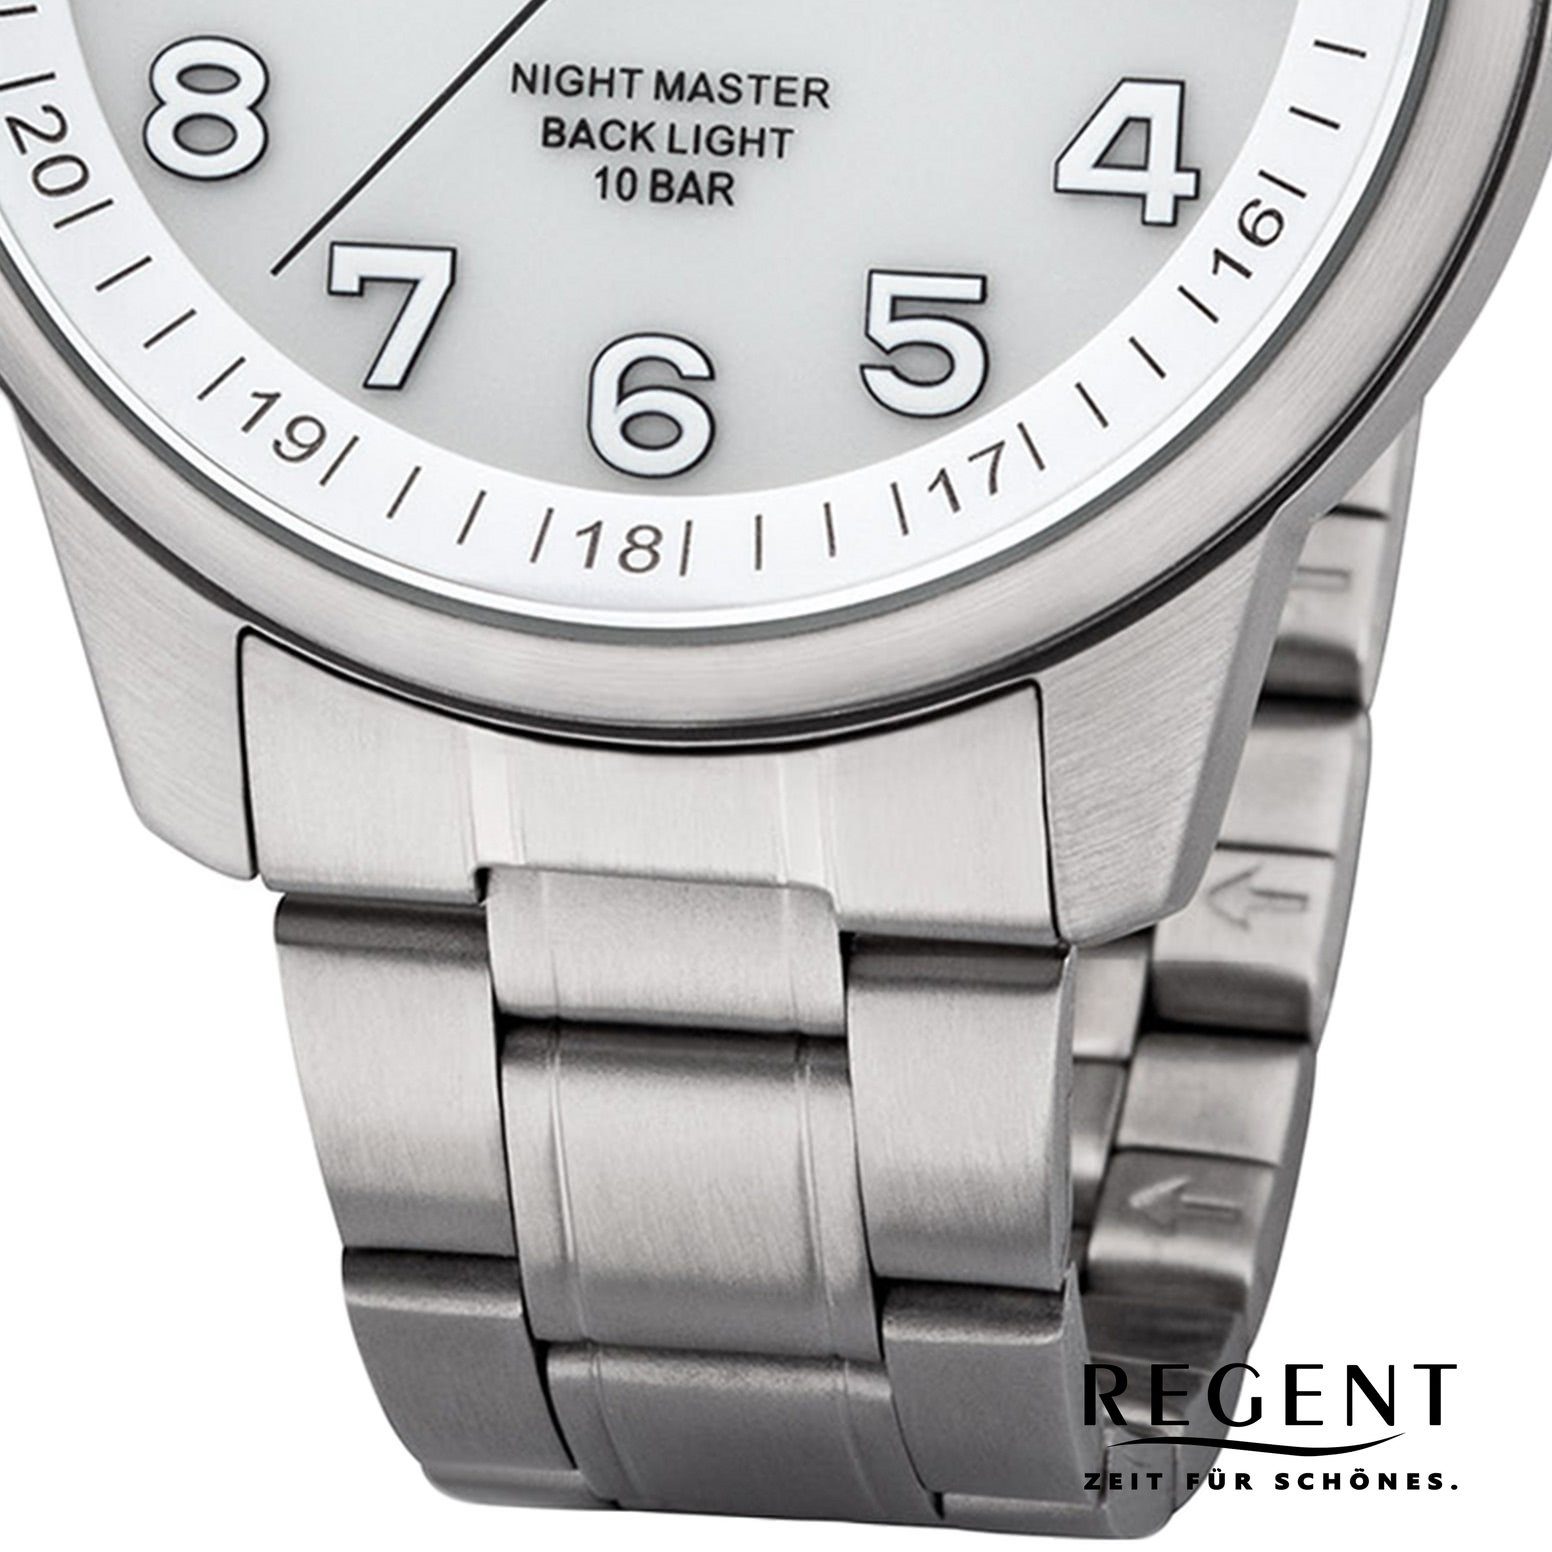 Regent Quarzuhr Regent Metallarmband rund, Metall F-1187 (ca. 41mm), Uhr groß Herren Herren Quarz, Armbanduhr